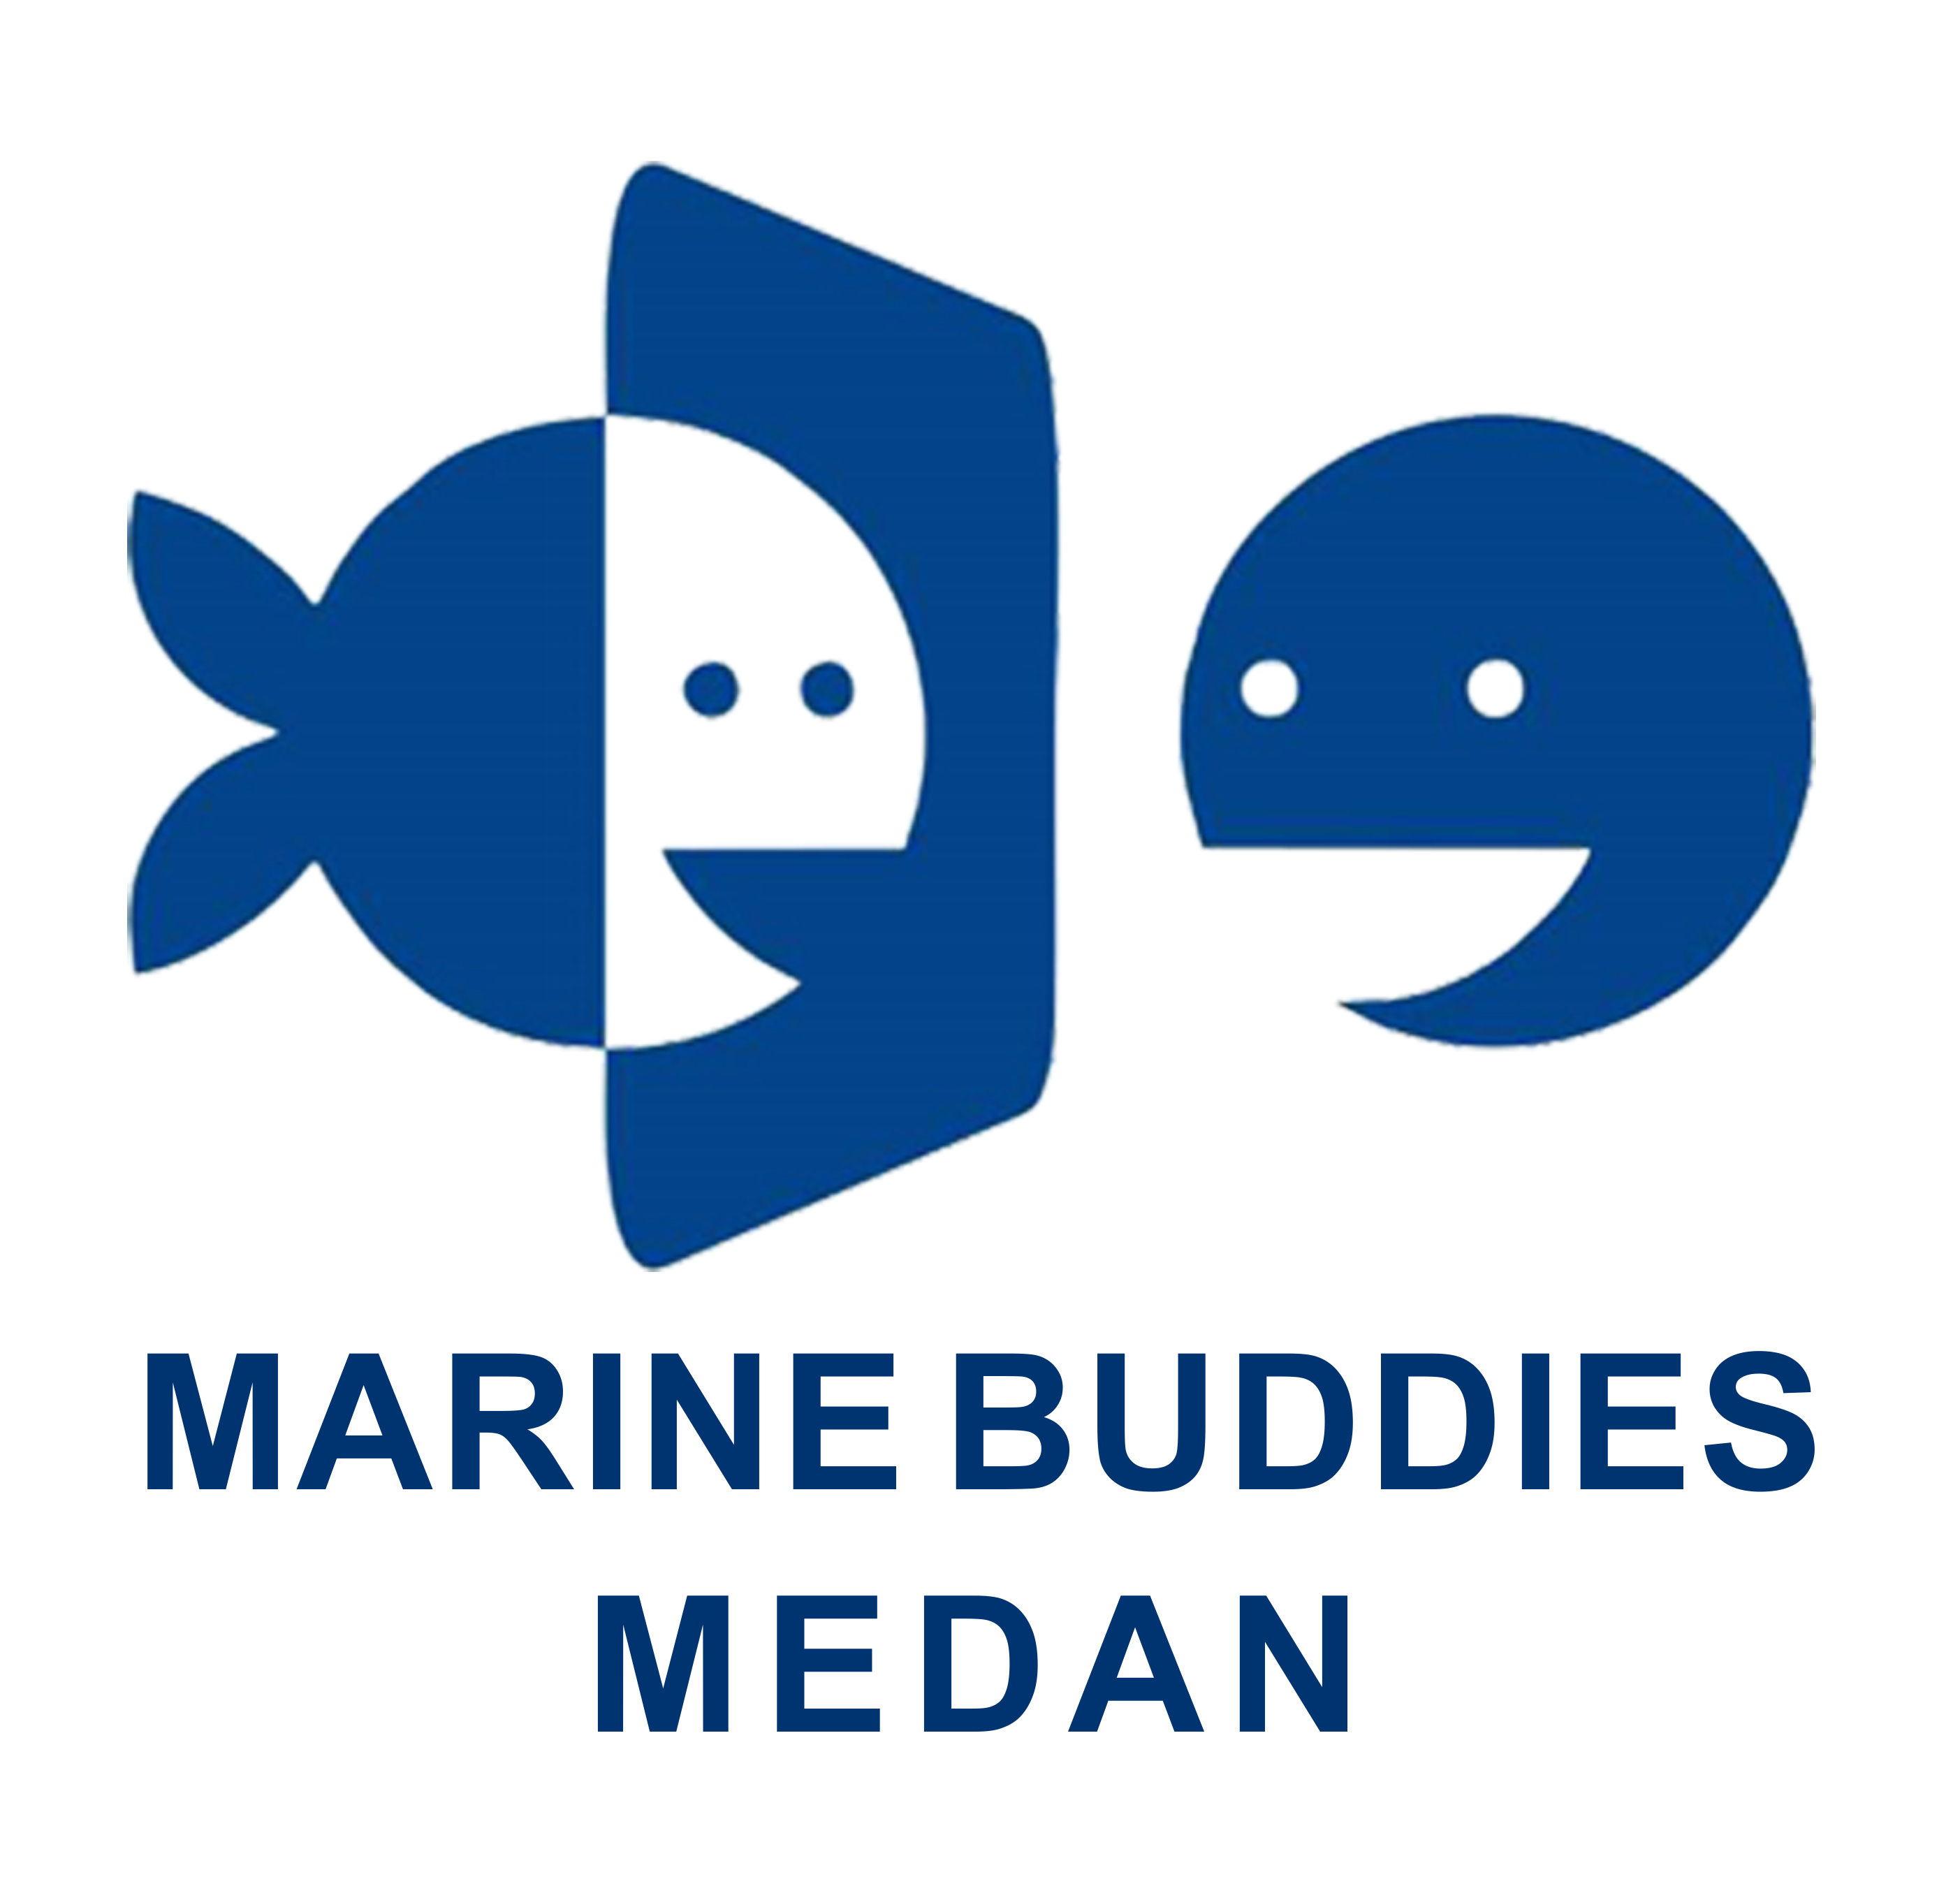 The Official Account of Marine Buddies Medan, North Sumatera
#TemanTamanLaut
#InOceanWeLive